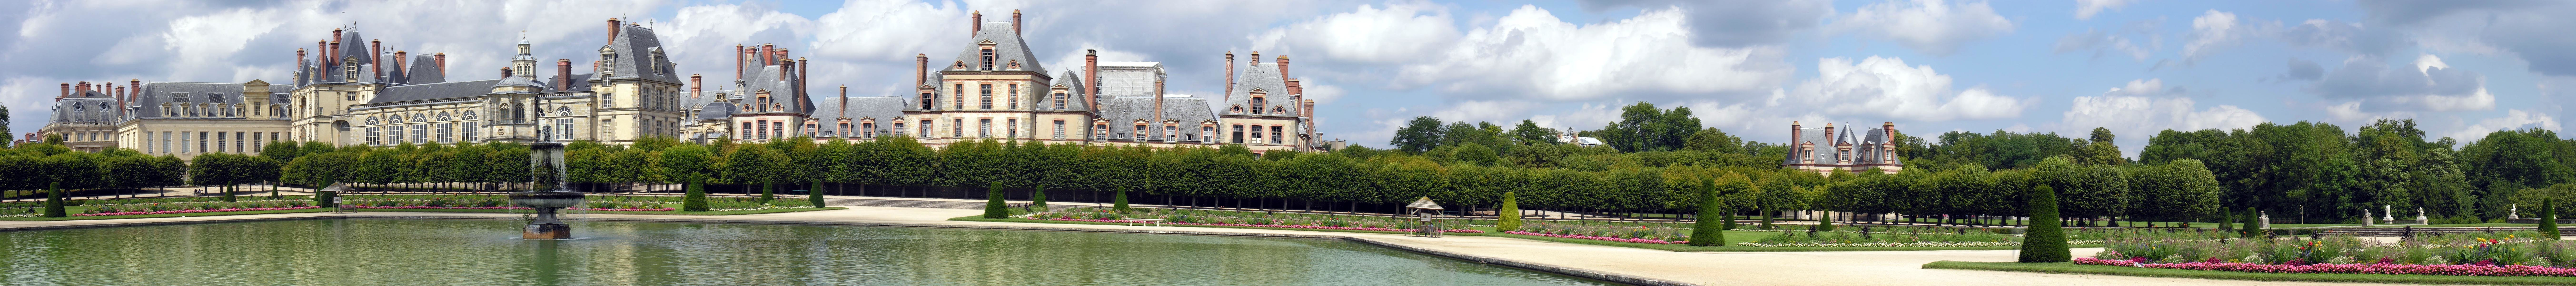 Castle of Fontainebleau - France (8).jpg